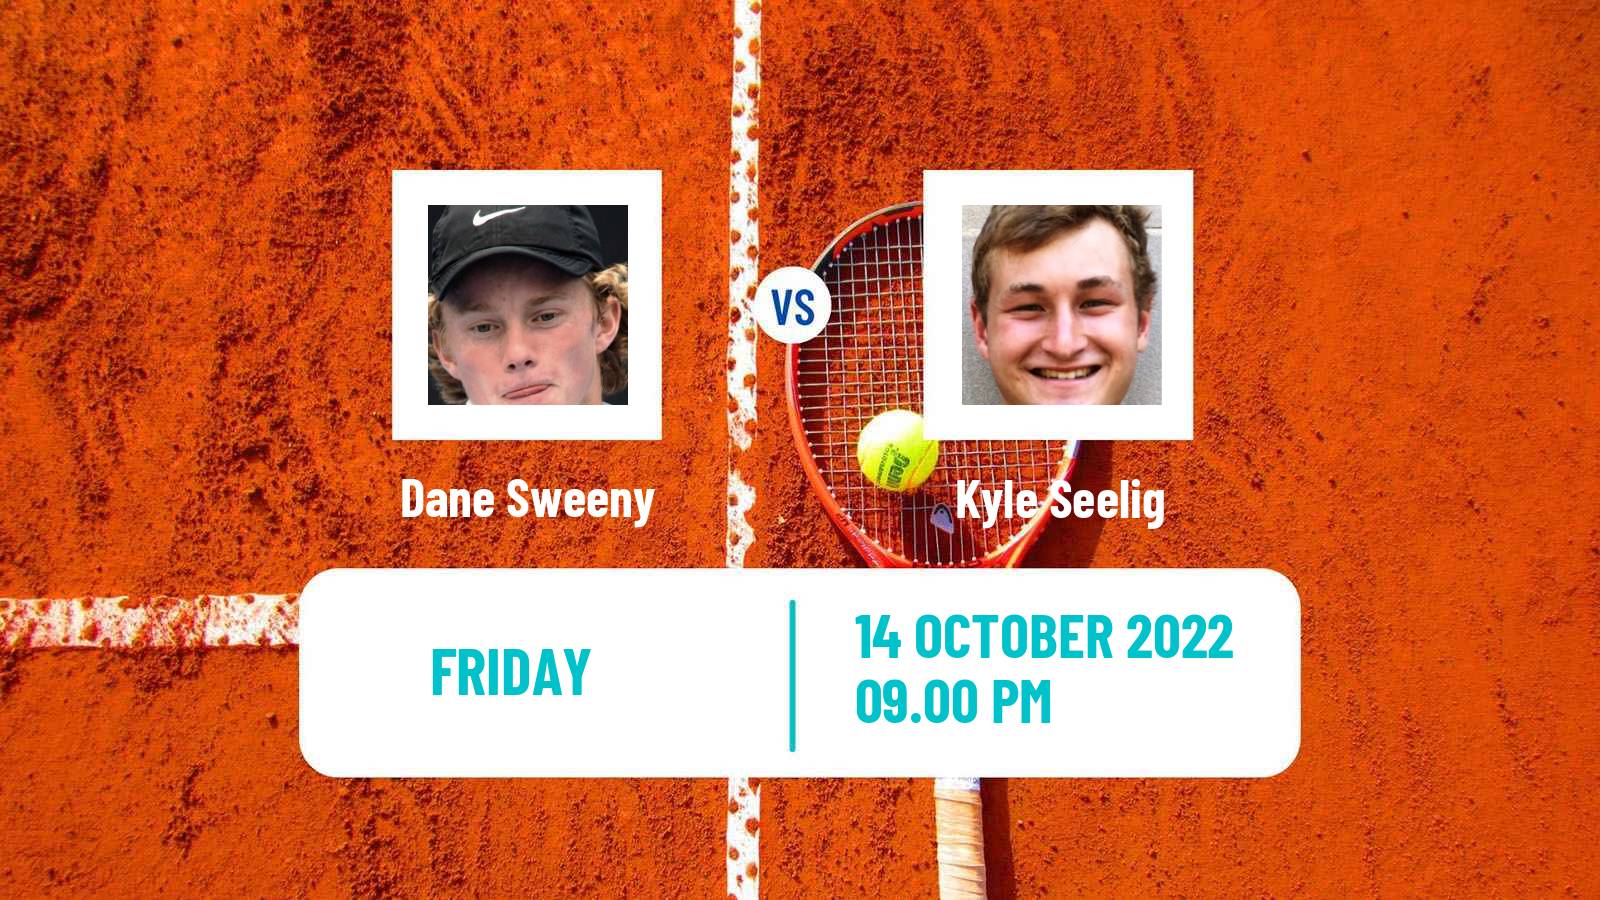 Tennis ITF Tournaments Dane Sweeny - Kyle Seelig